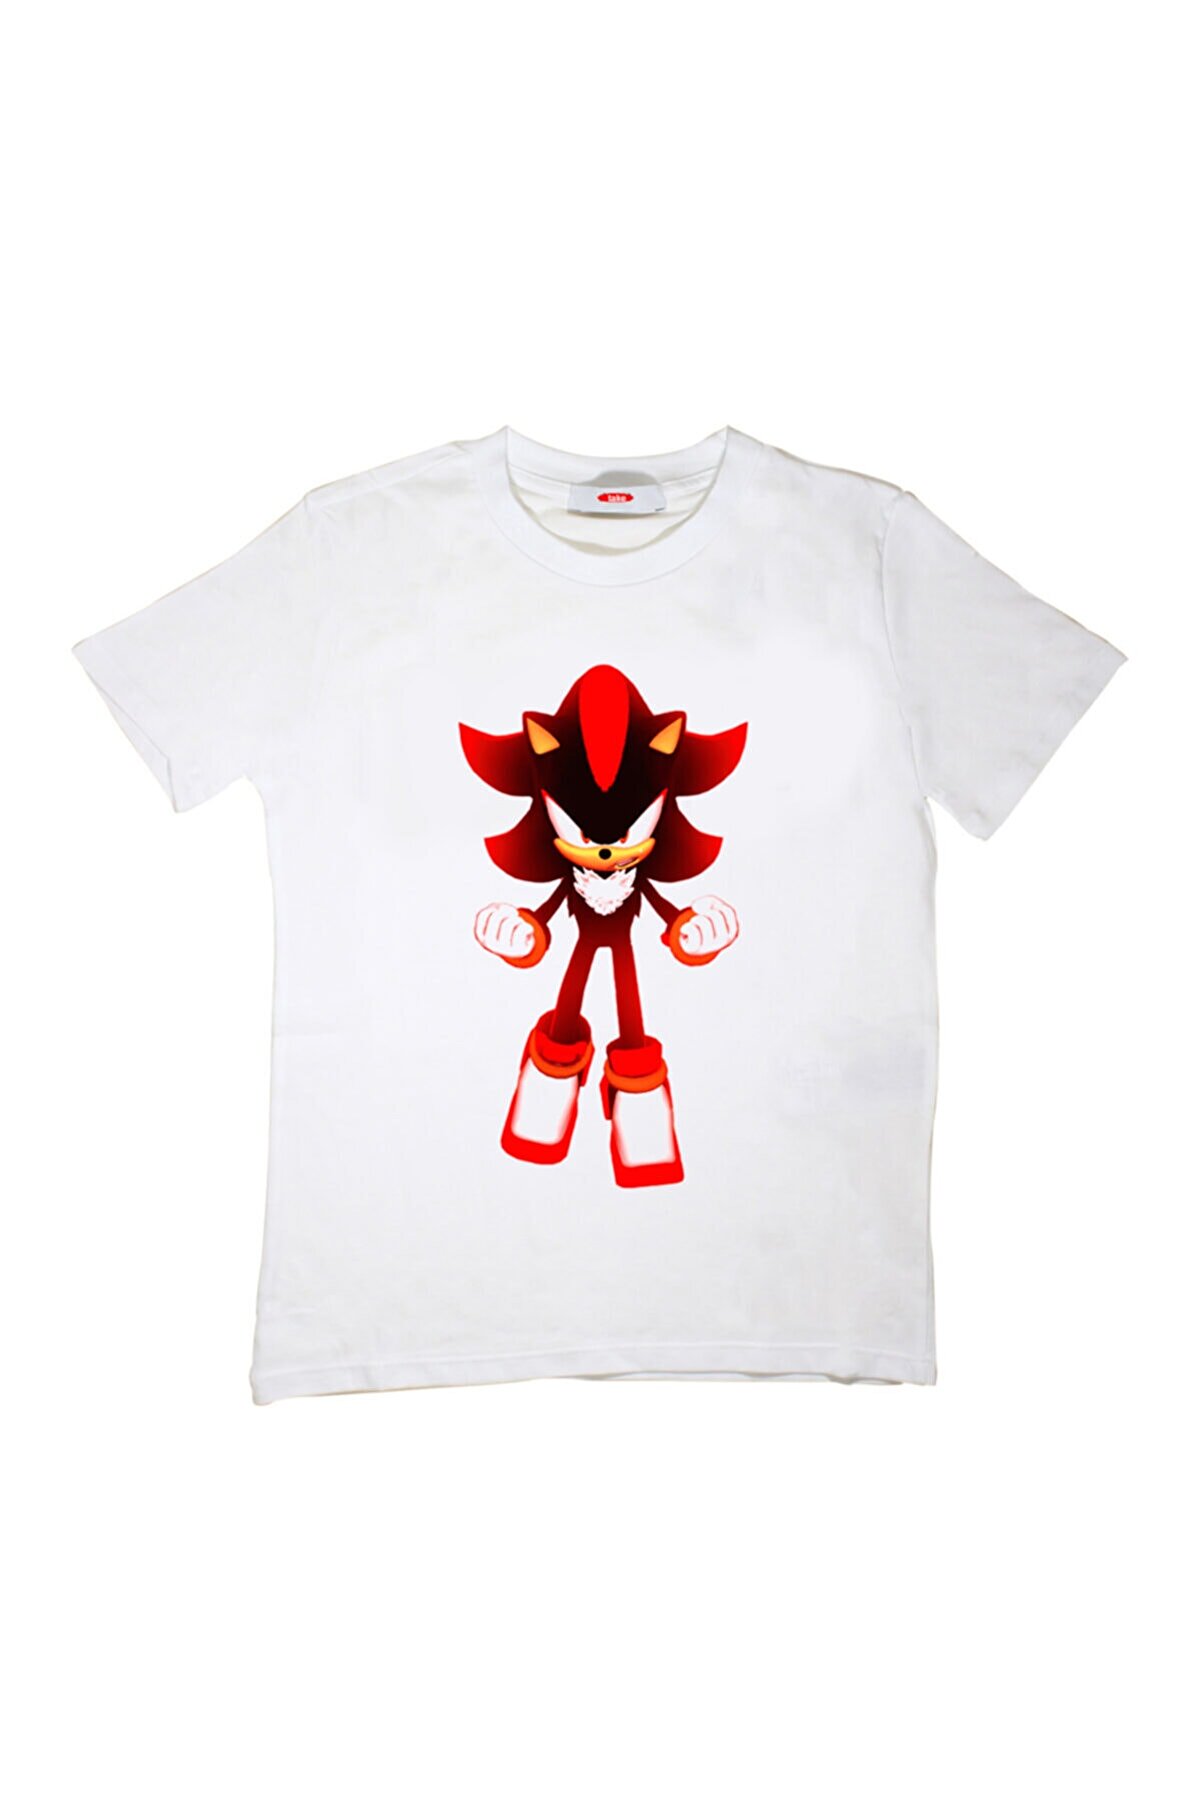 TakeTshirt Sonic The Hedgehog Çocuk Tişört Beyaz